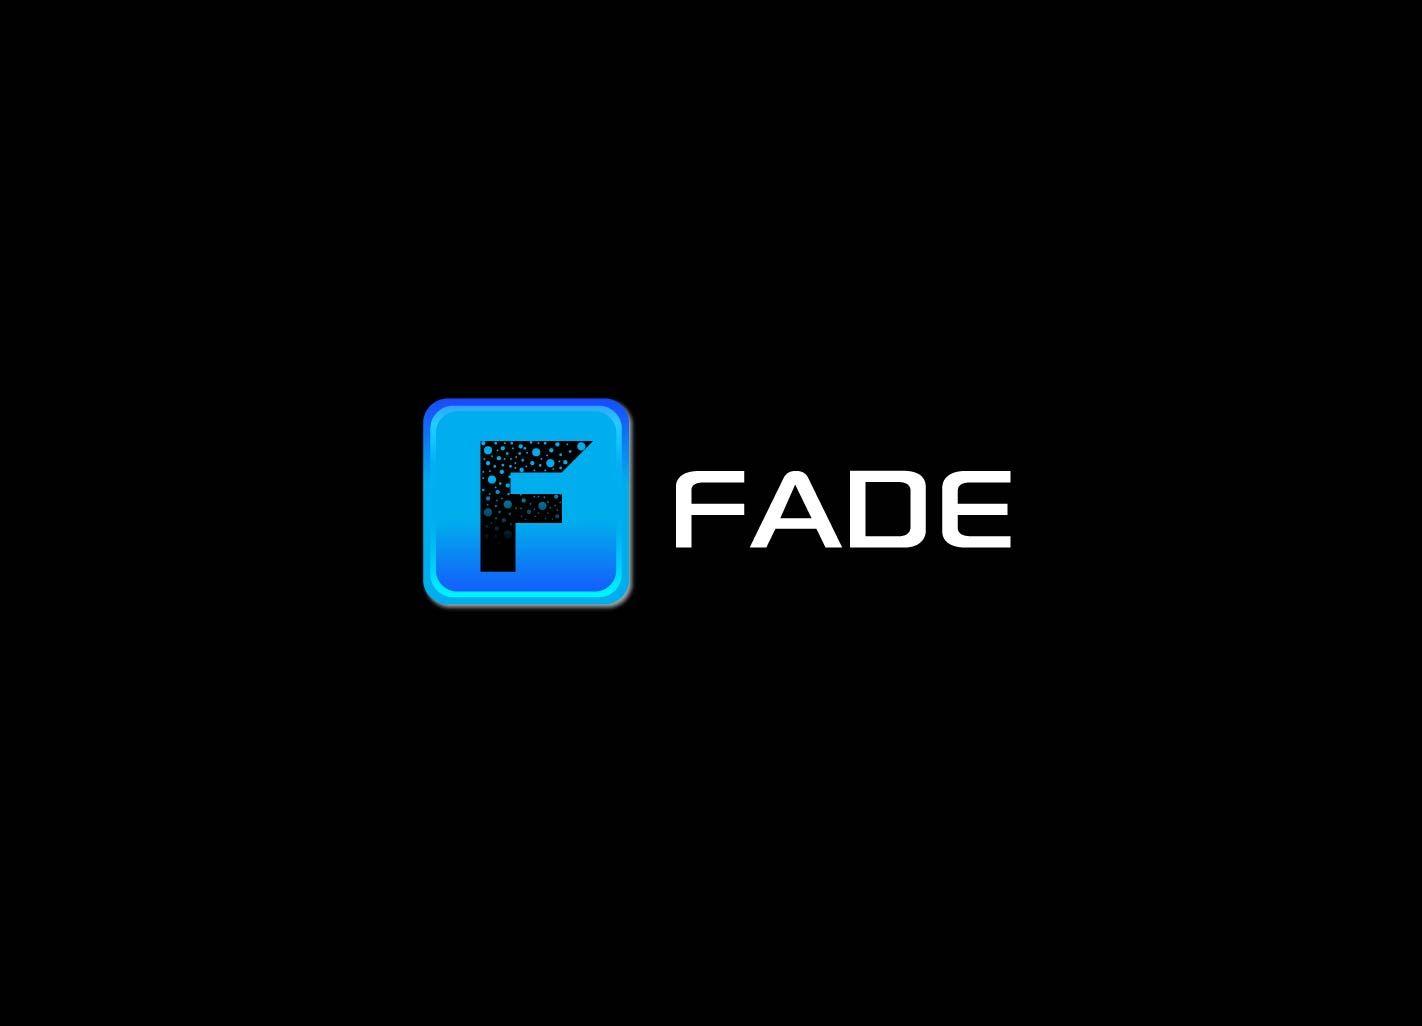 Fade Logo - Modern, Playful, Communication Logo Design for Fade, F, or just an ...